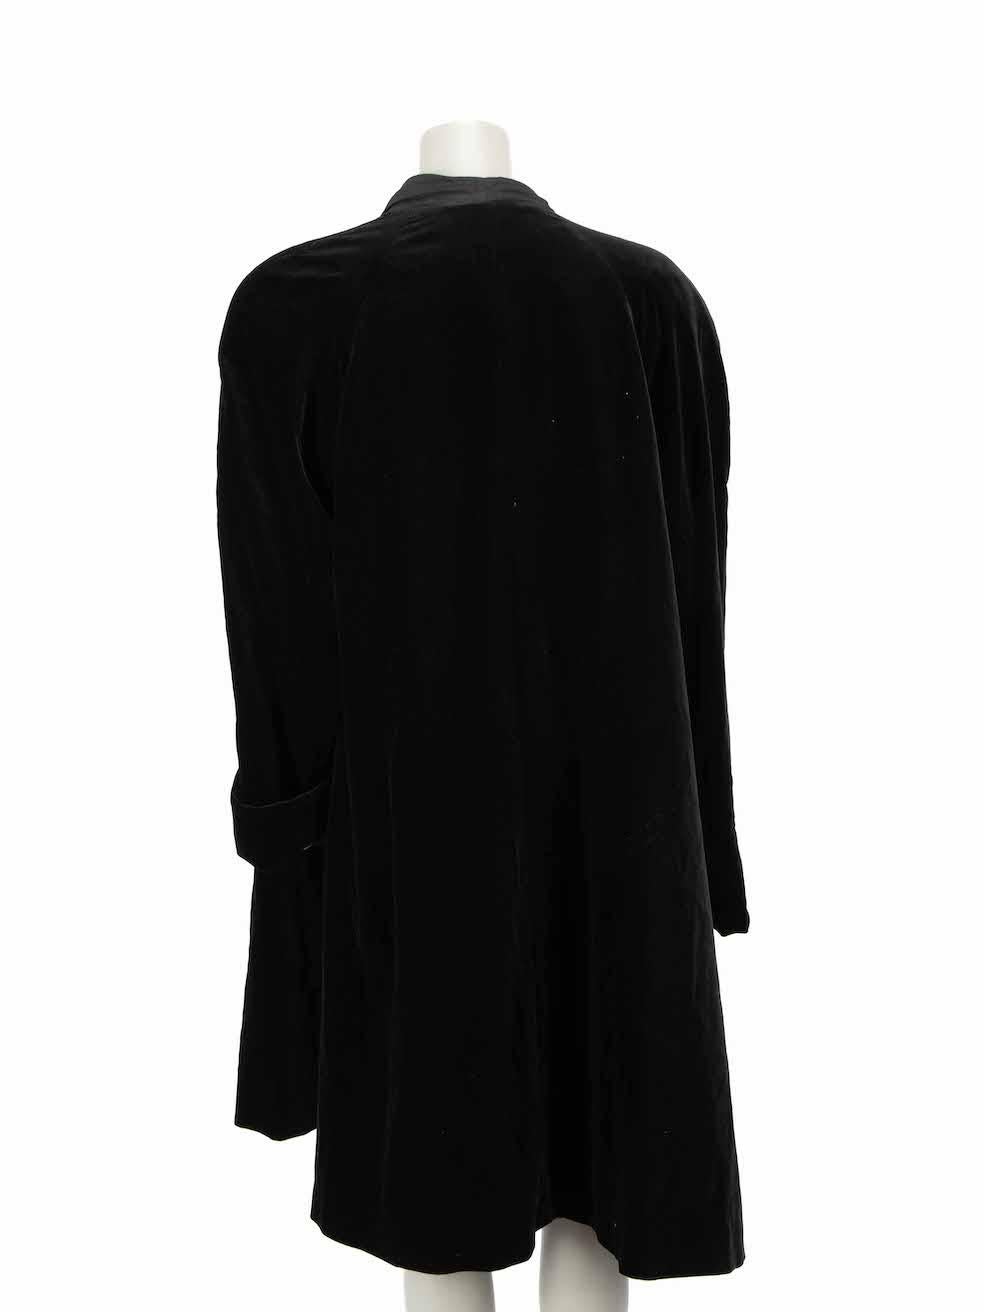 Louis Feraud Vintage Black Velvet Pleat Coat Size M In Excellent Condition For Sale In London, GB